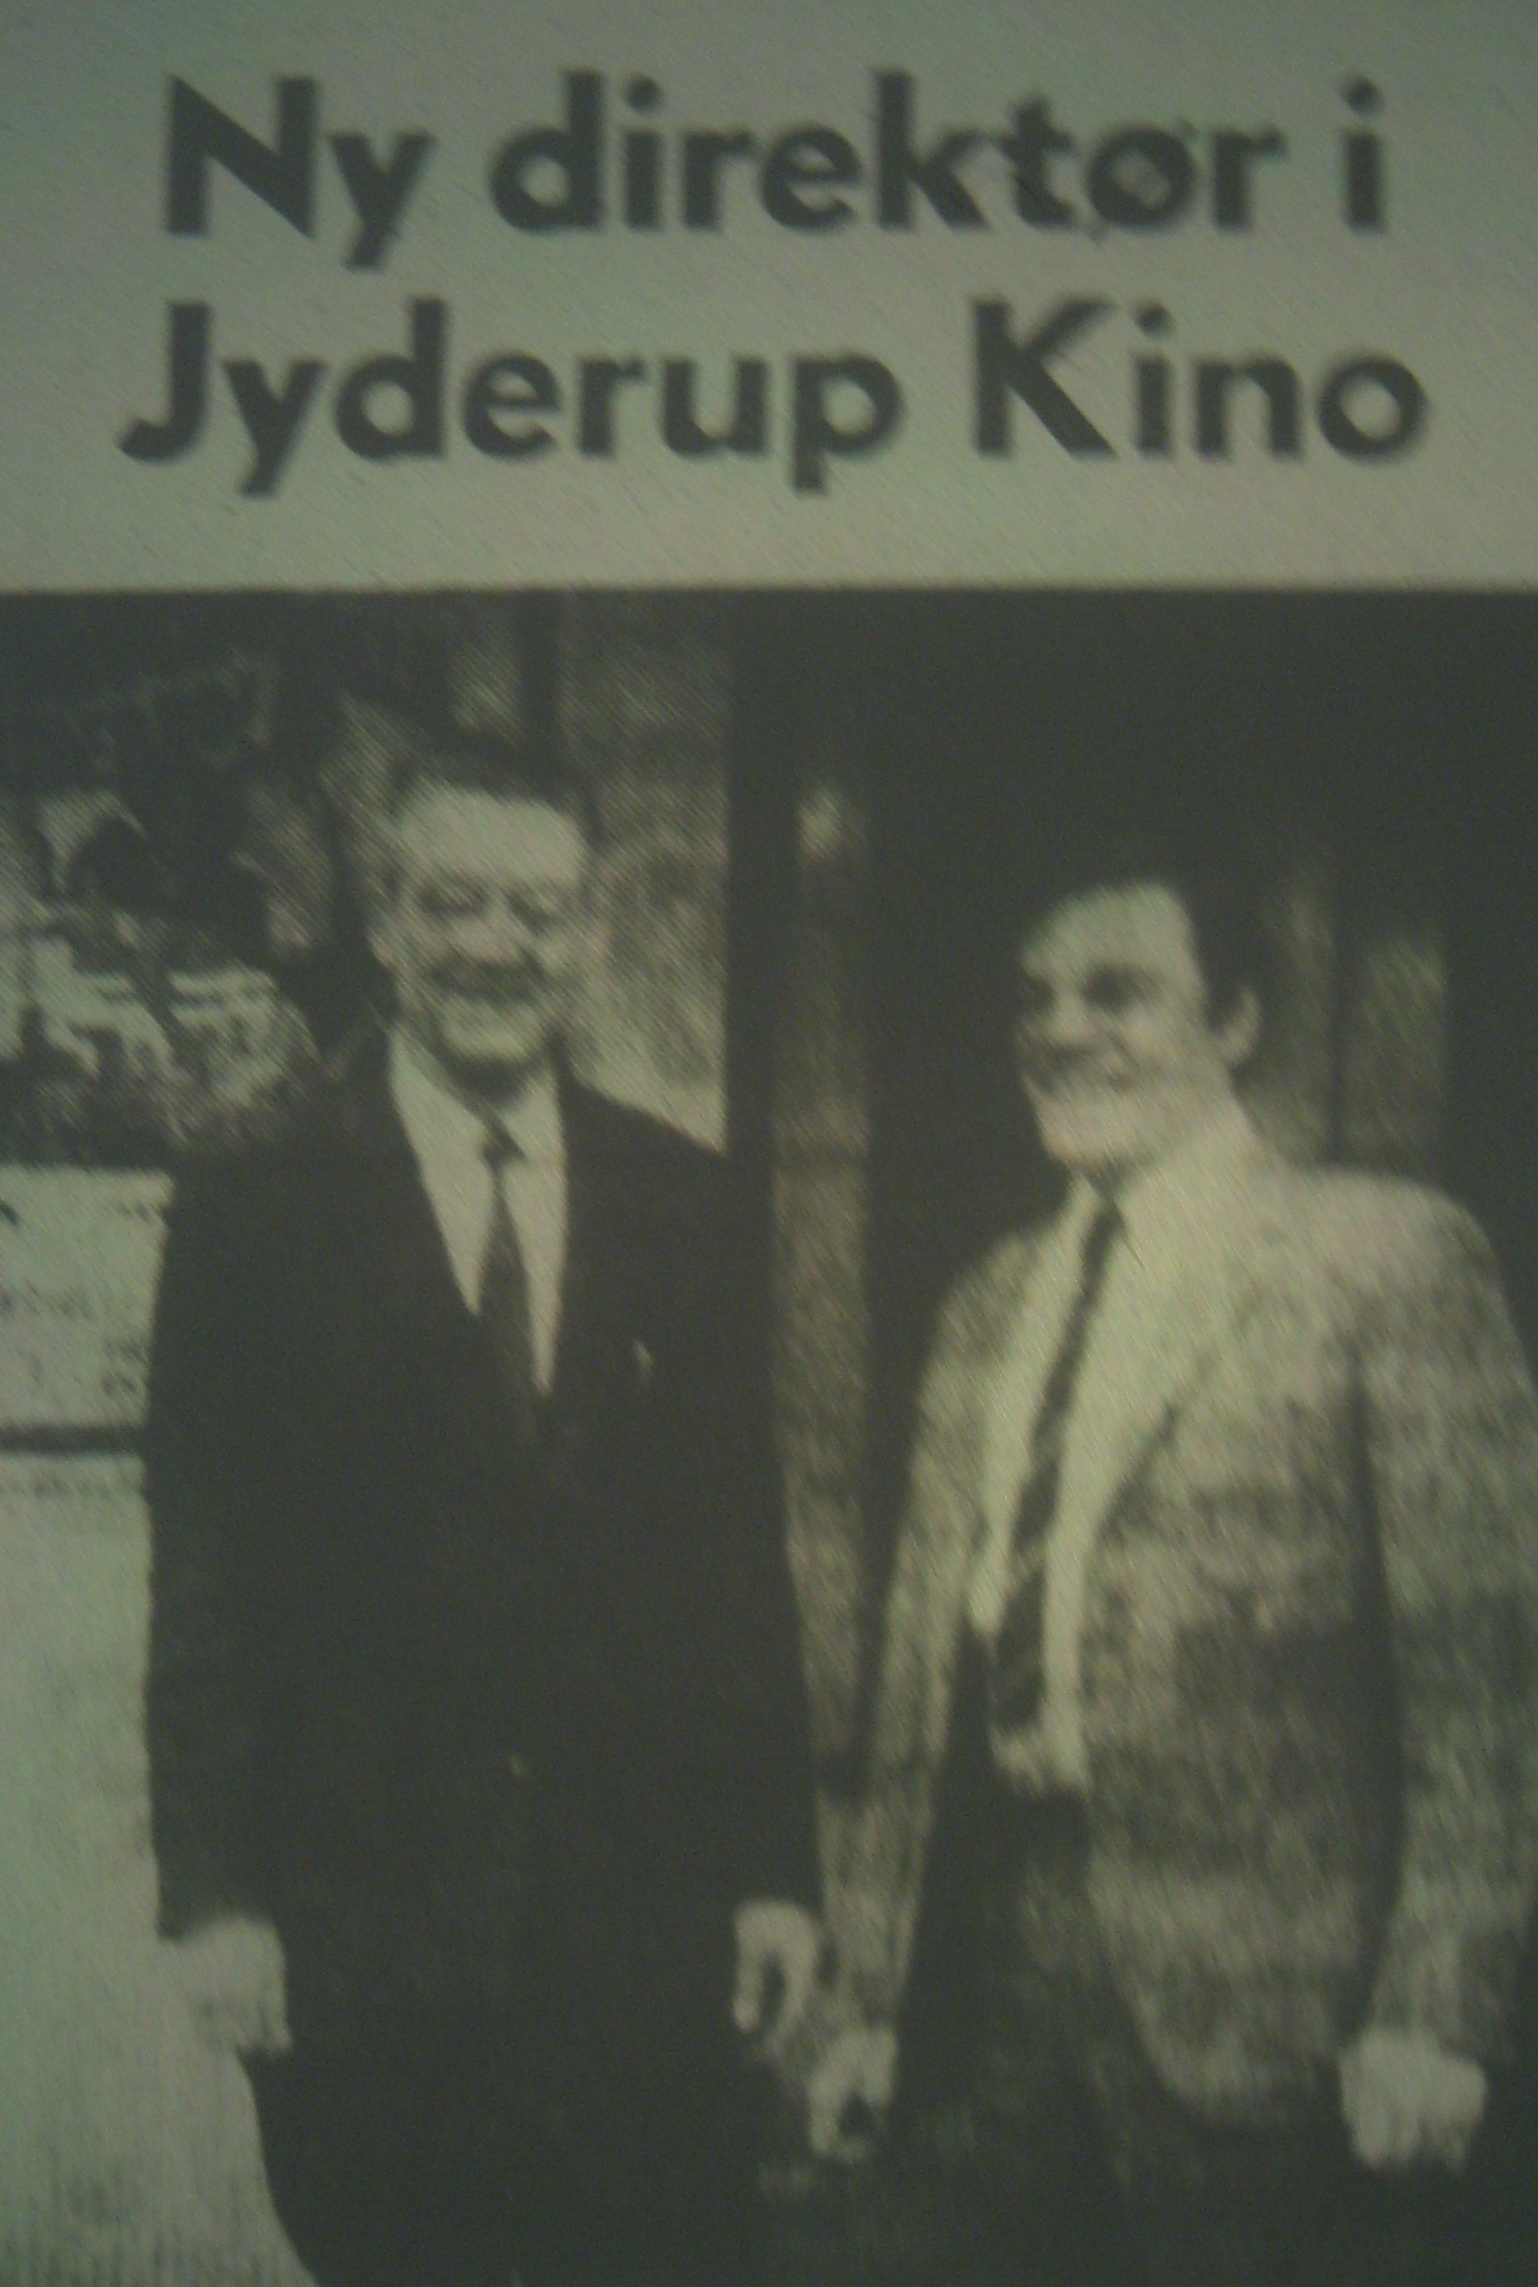 Jyderup Kino 1970